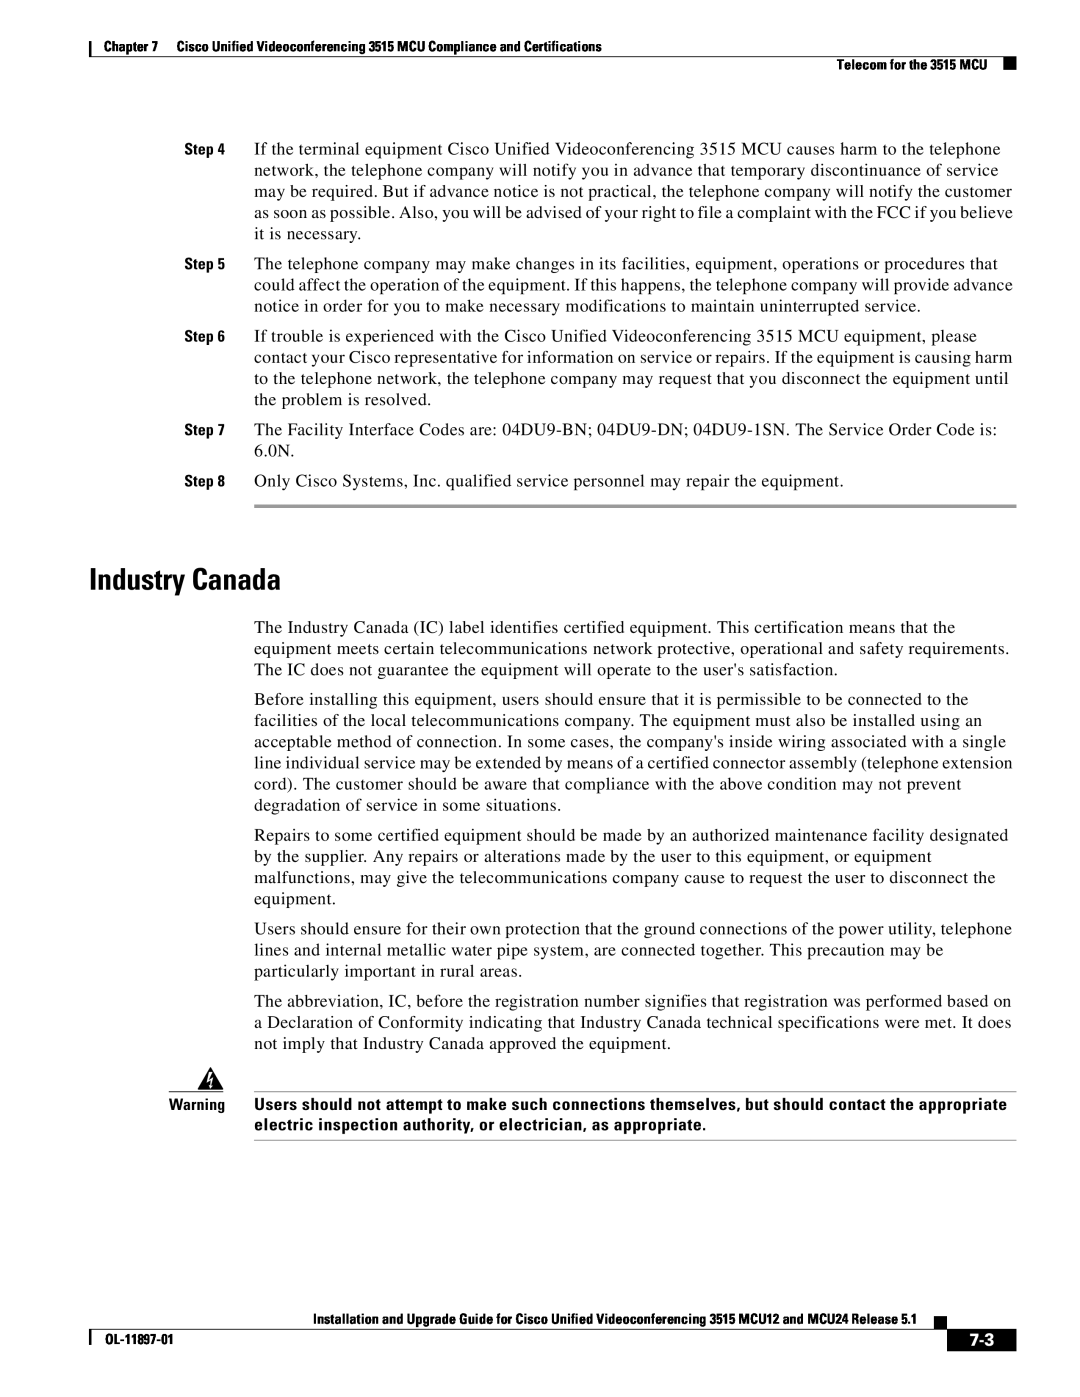 Cisco Systems MCU24 manual Industry Canada 